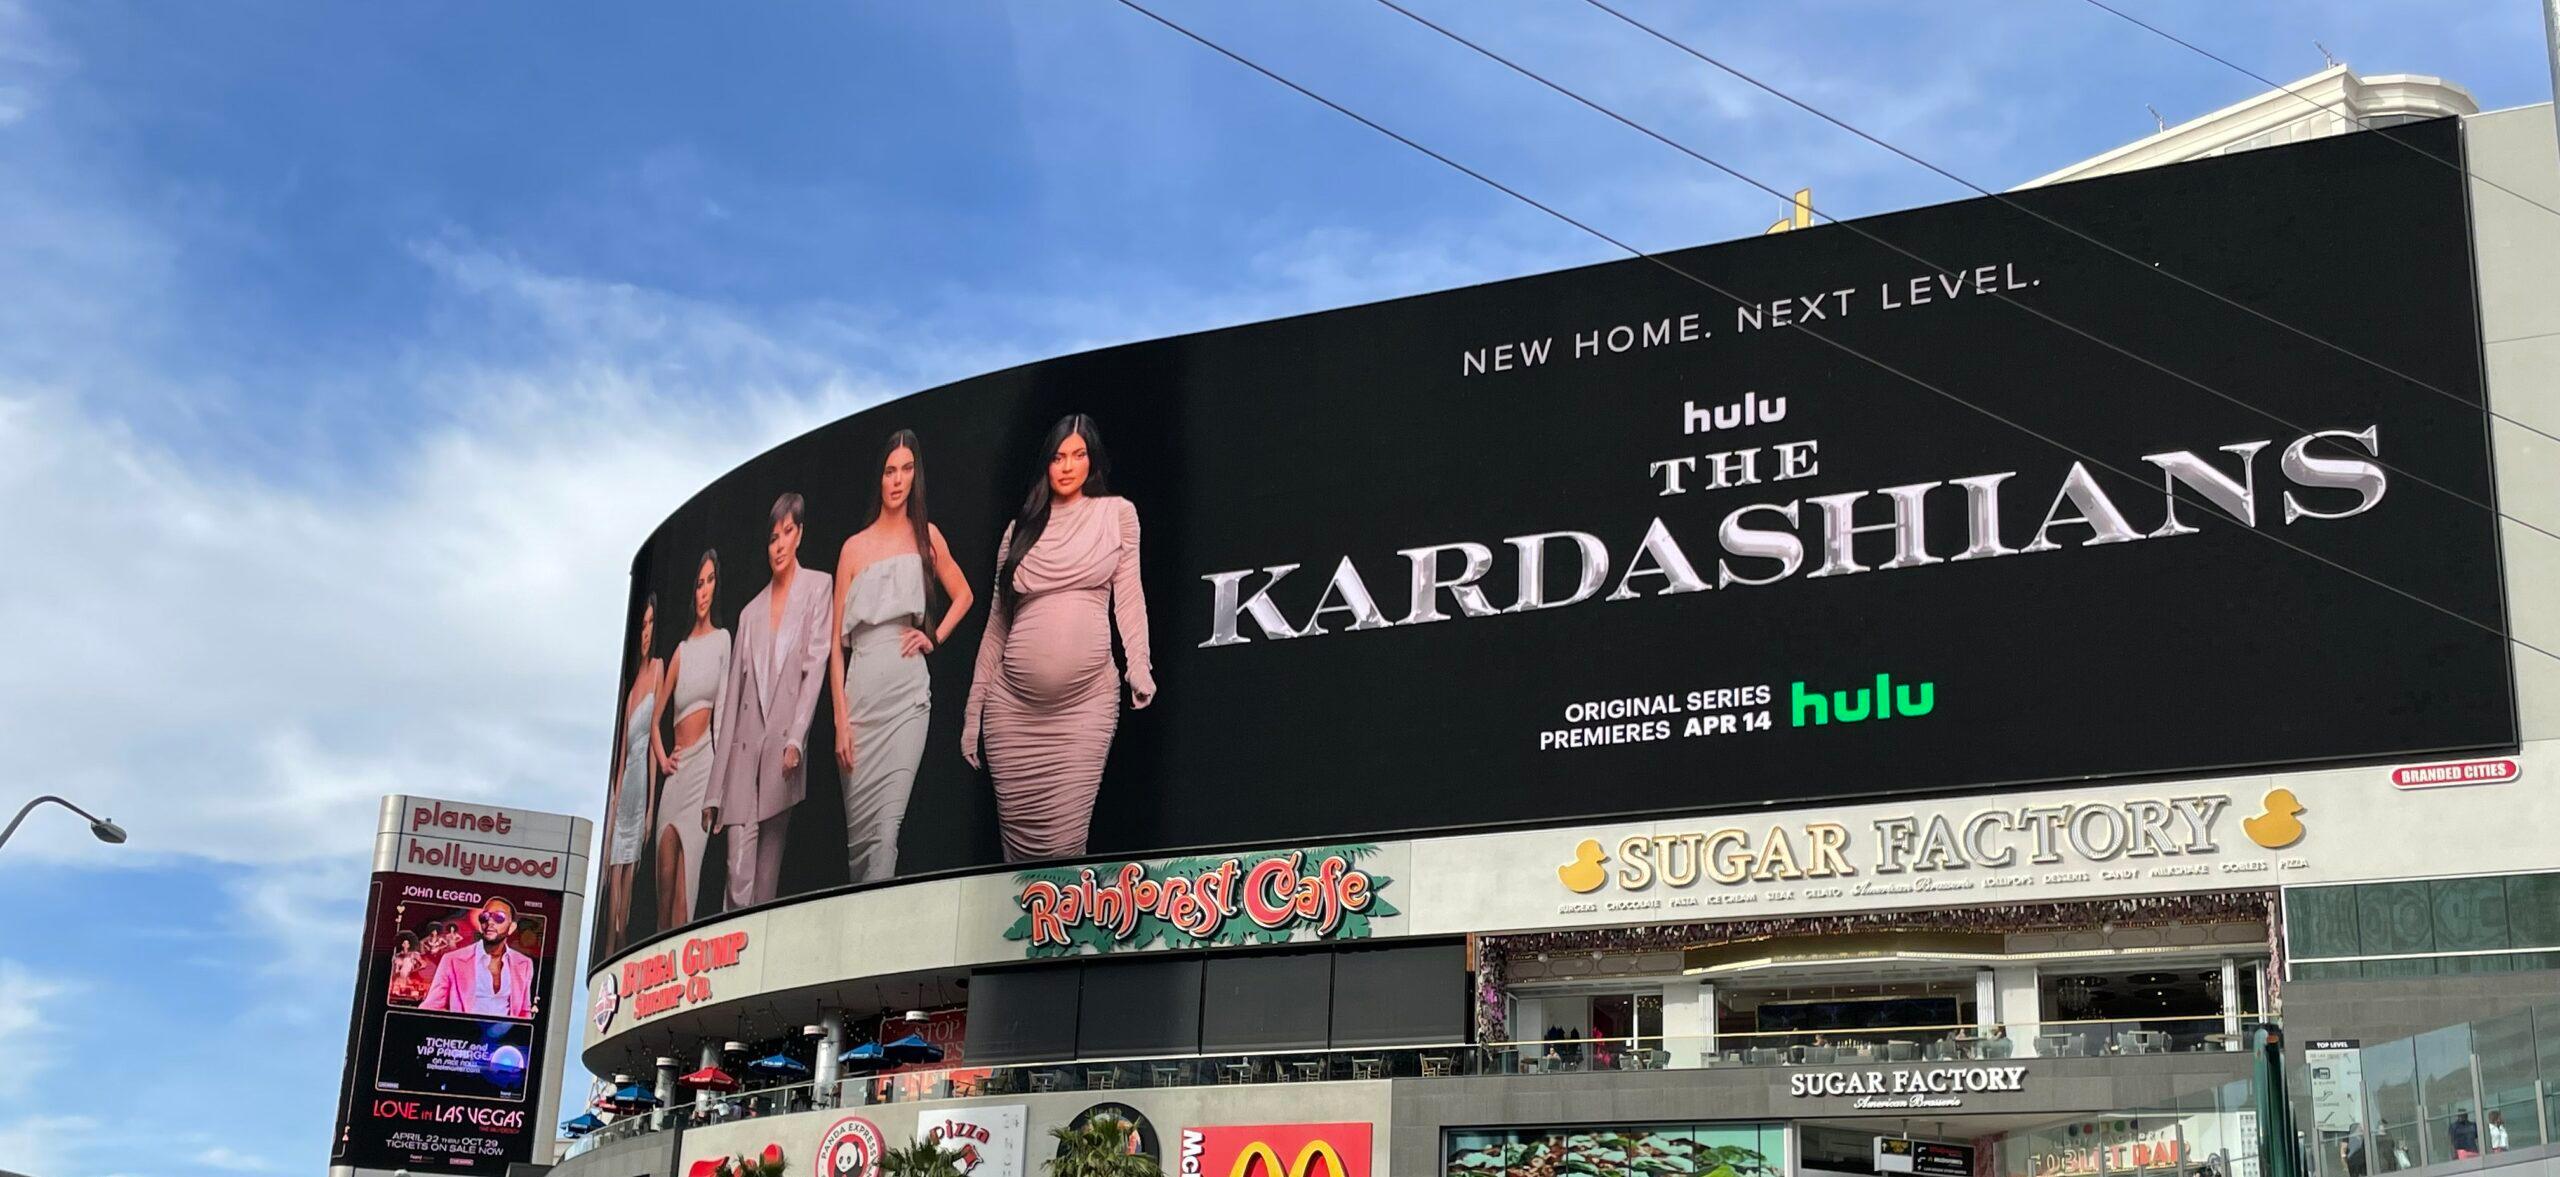 The Kardashians take over the biggest billboard screen in the USA in Las Vegas